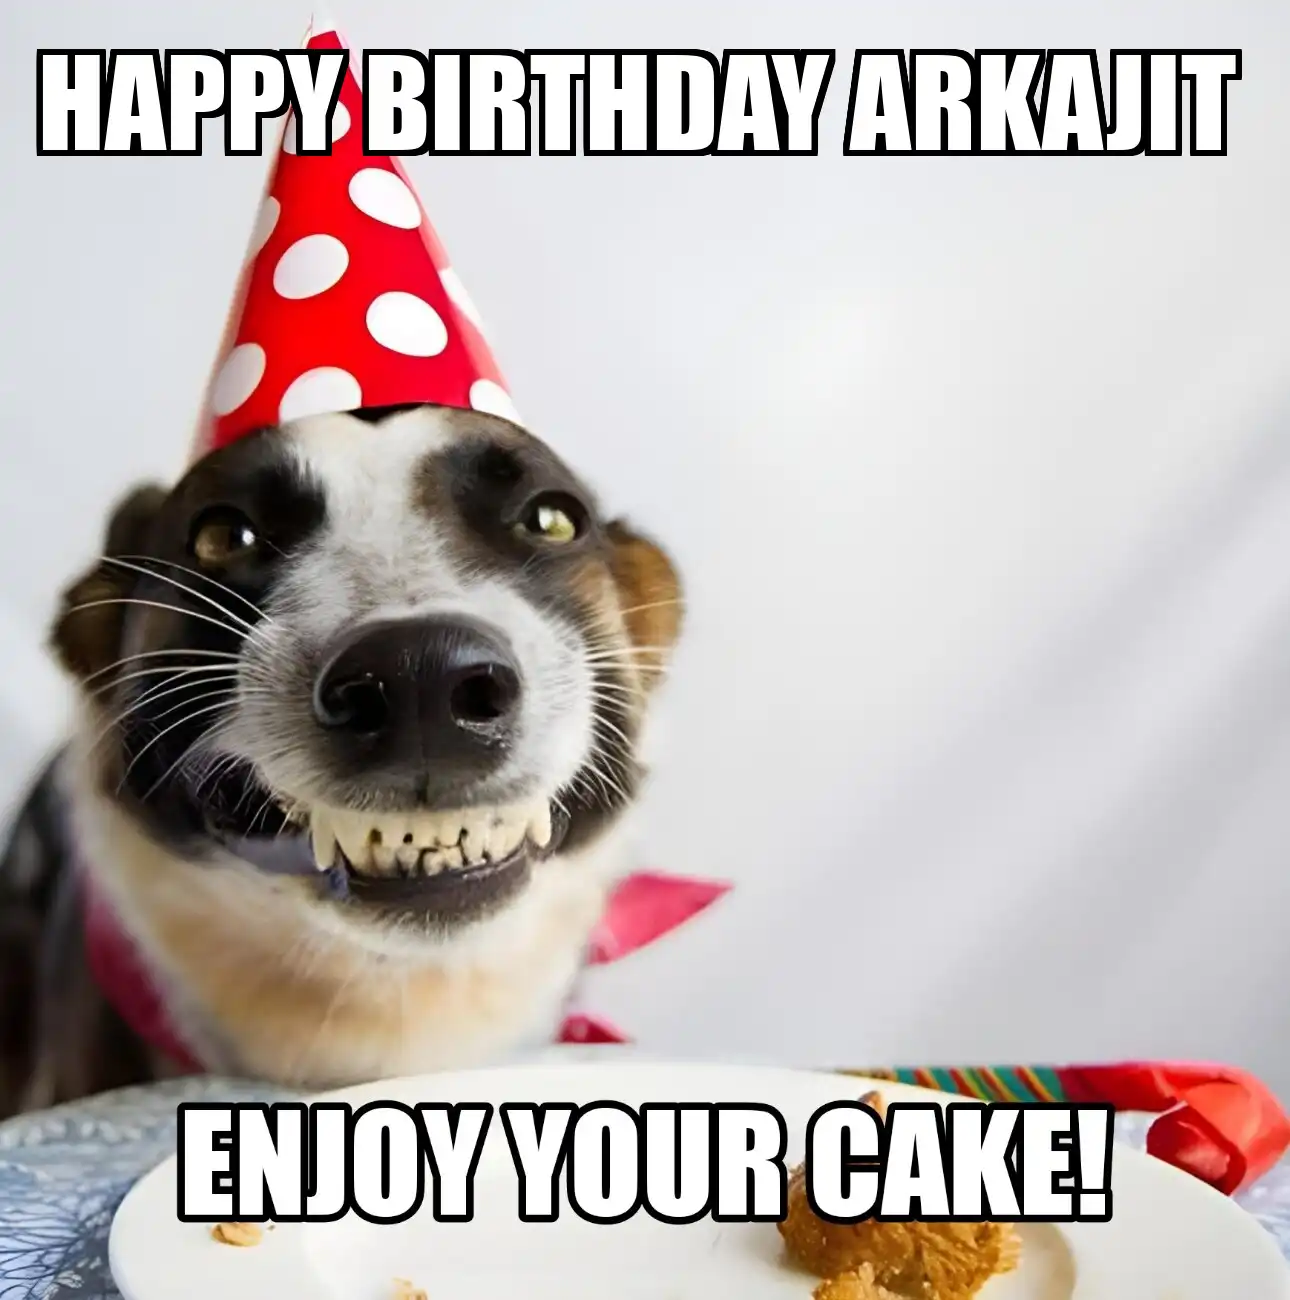 Happy Birthday Arkajit Enjoy Your Cake Dog Meme